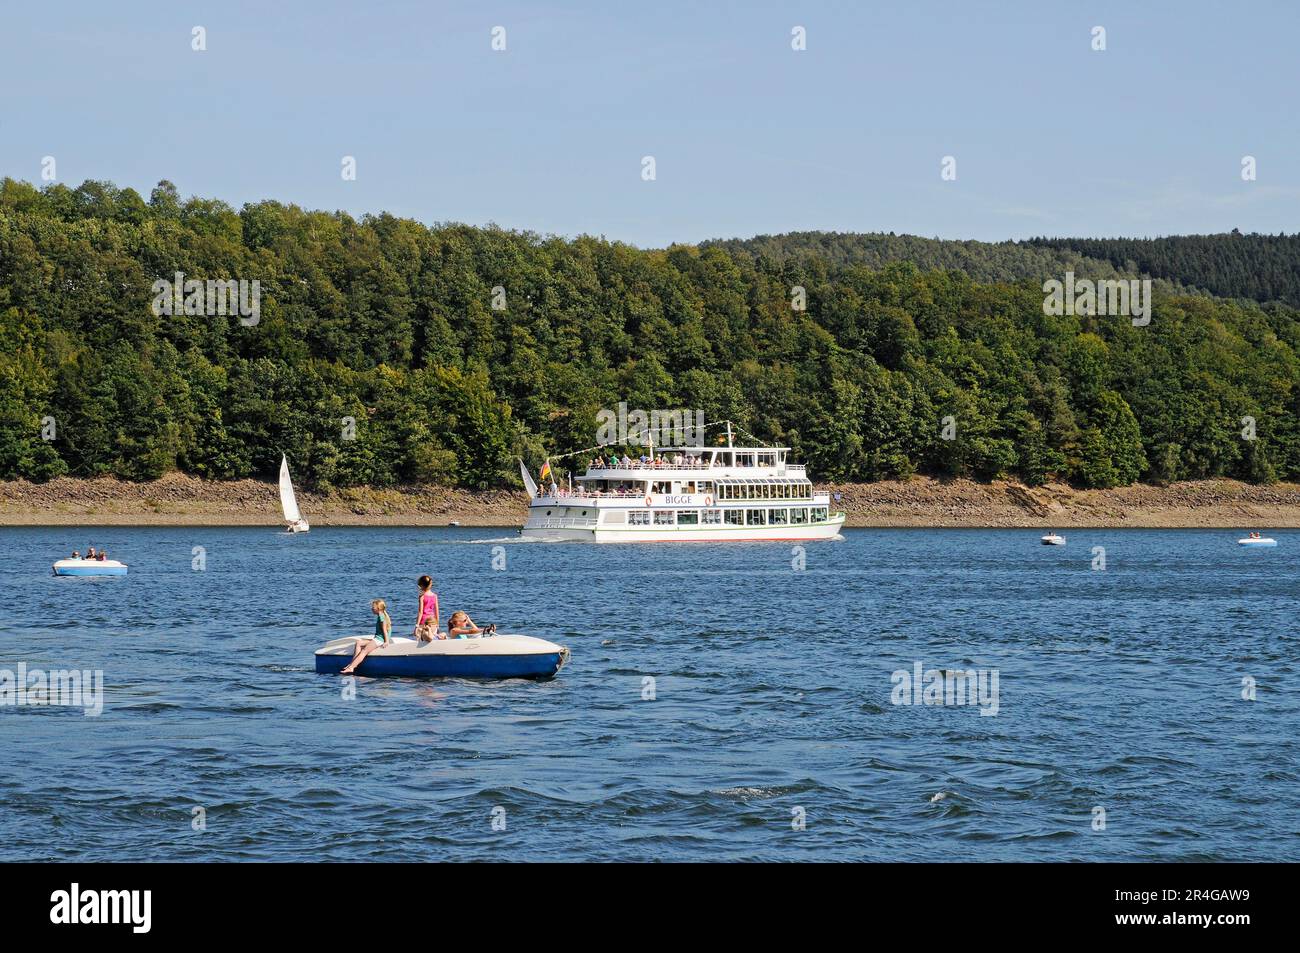 Excursion boat, lake, passenger ship, Sondern, Biggetalsperre, Olpe, Ebbegebirge nature Park, Sauerland, North Rhine-Westphalia, Germany Stock Photo